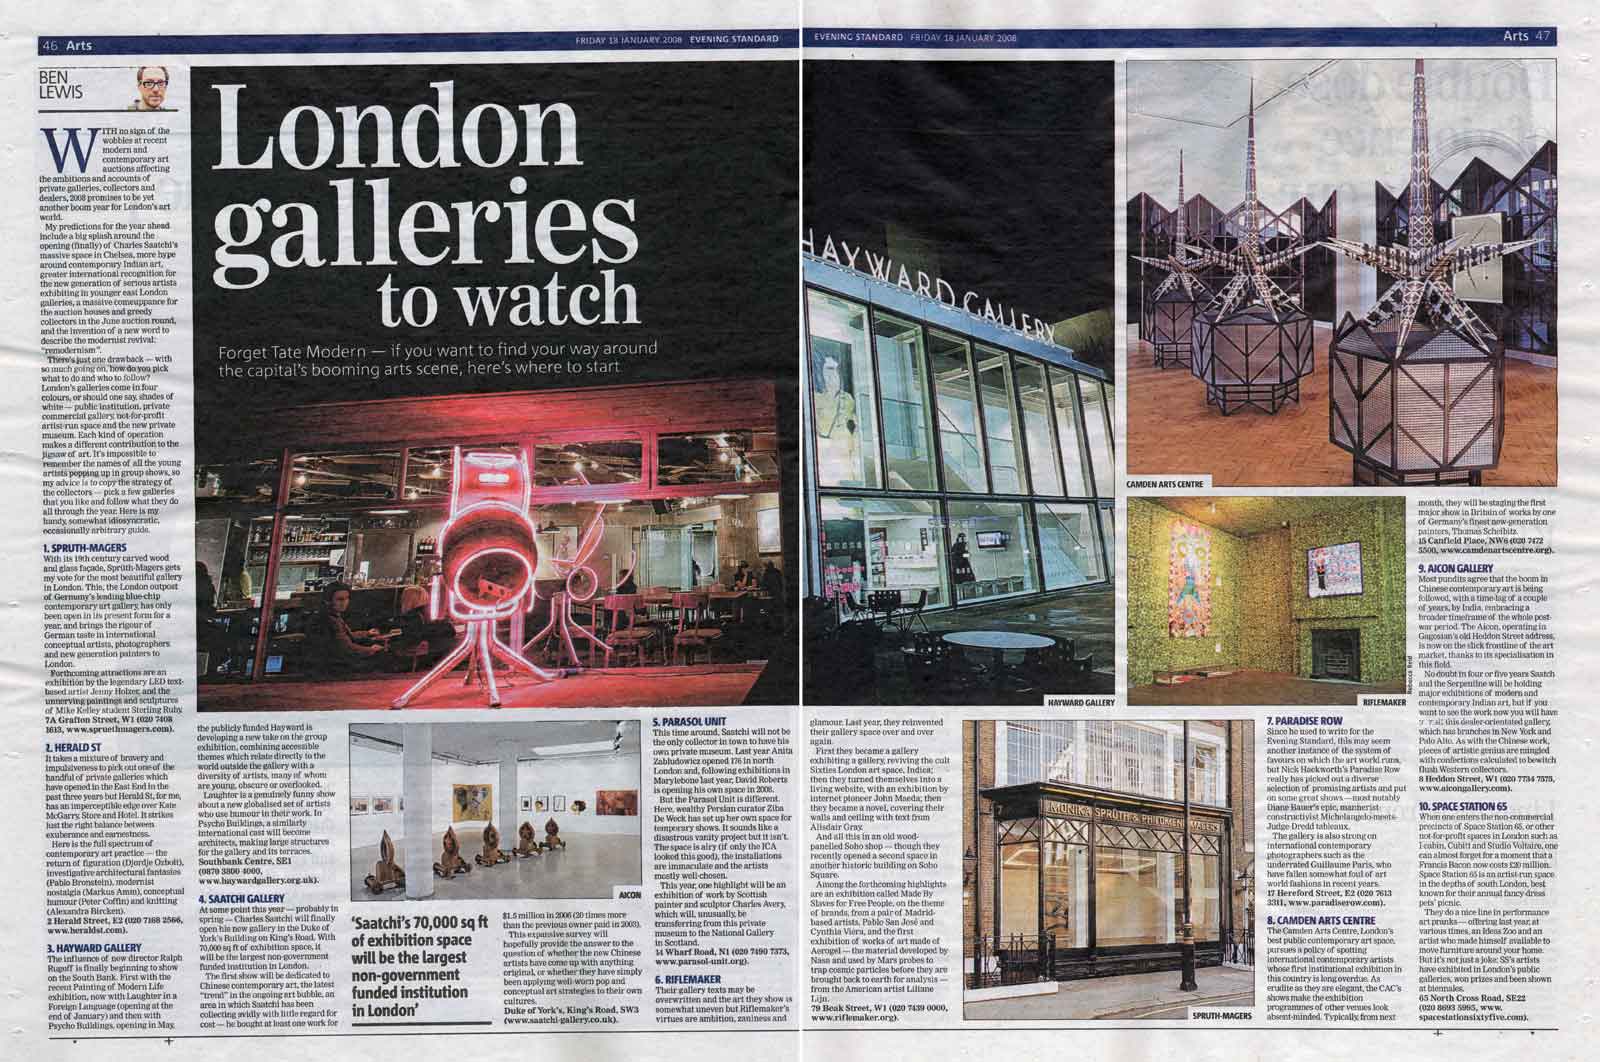 Evening Standard, London Galleries to Watch